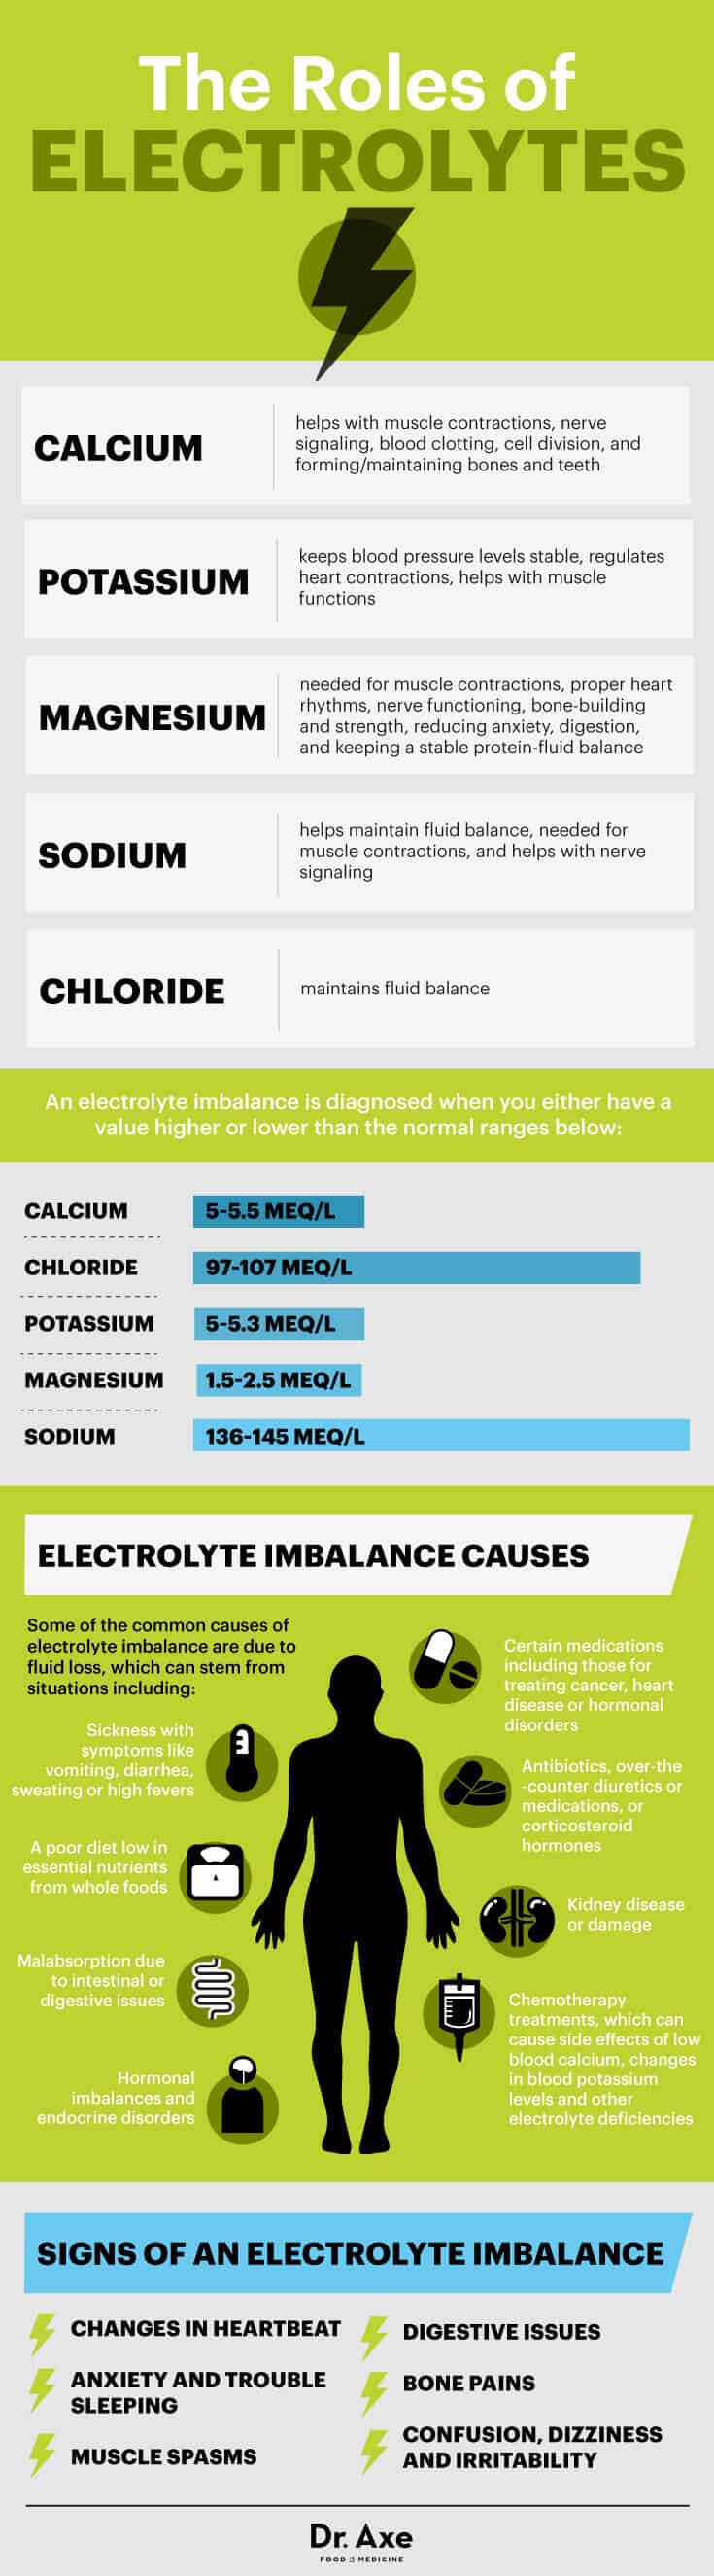 Electrolyte imbalance symptoms - Dr. Axe